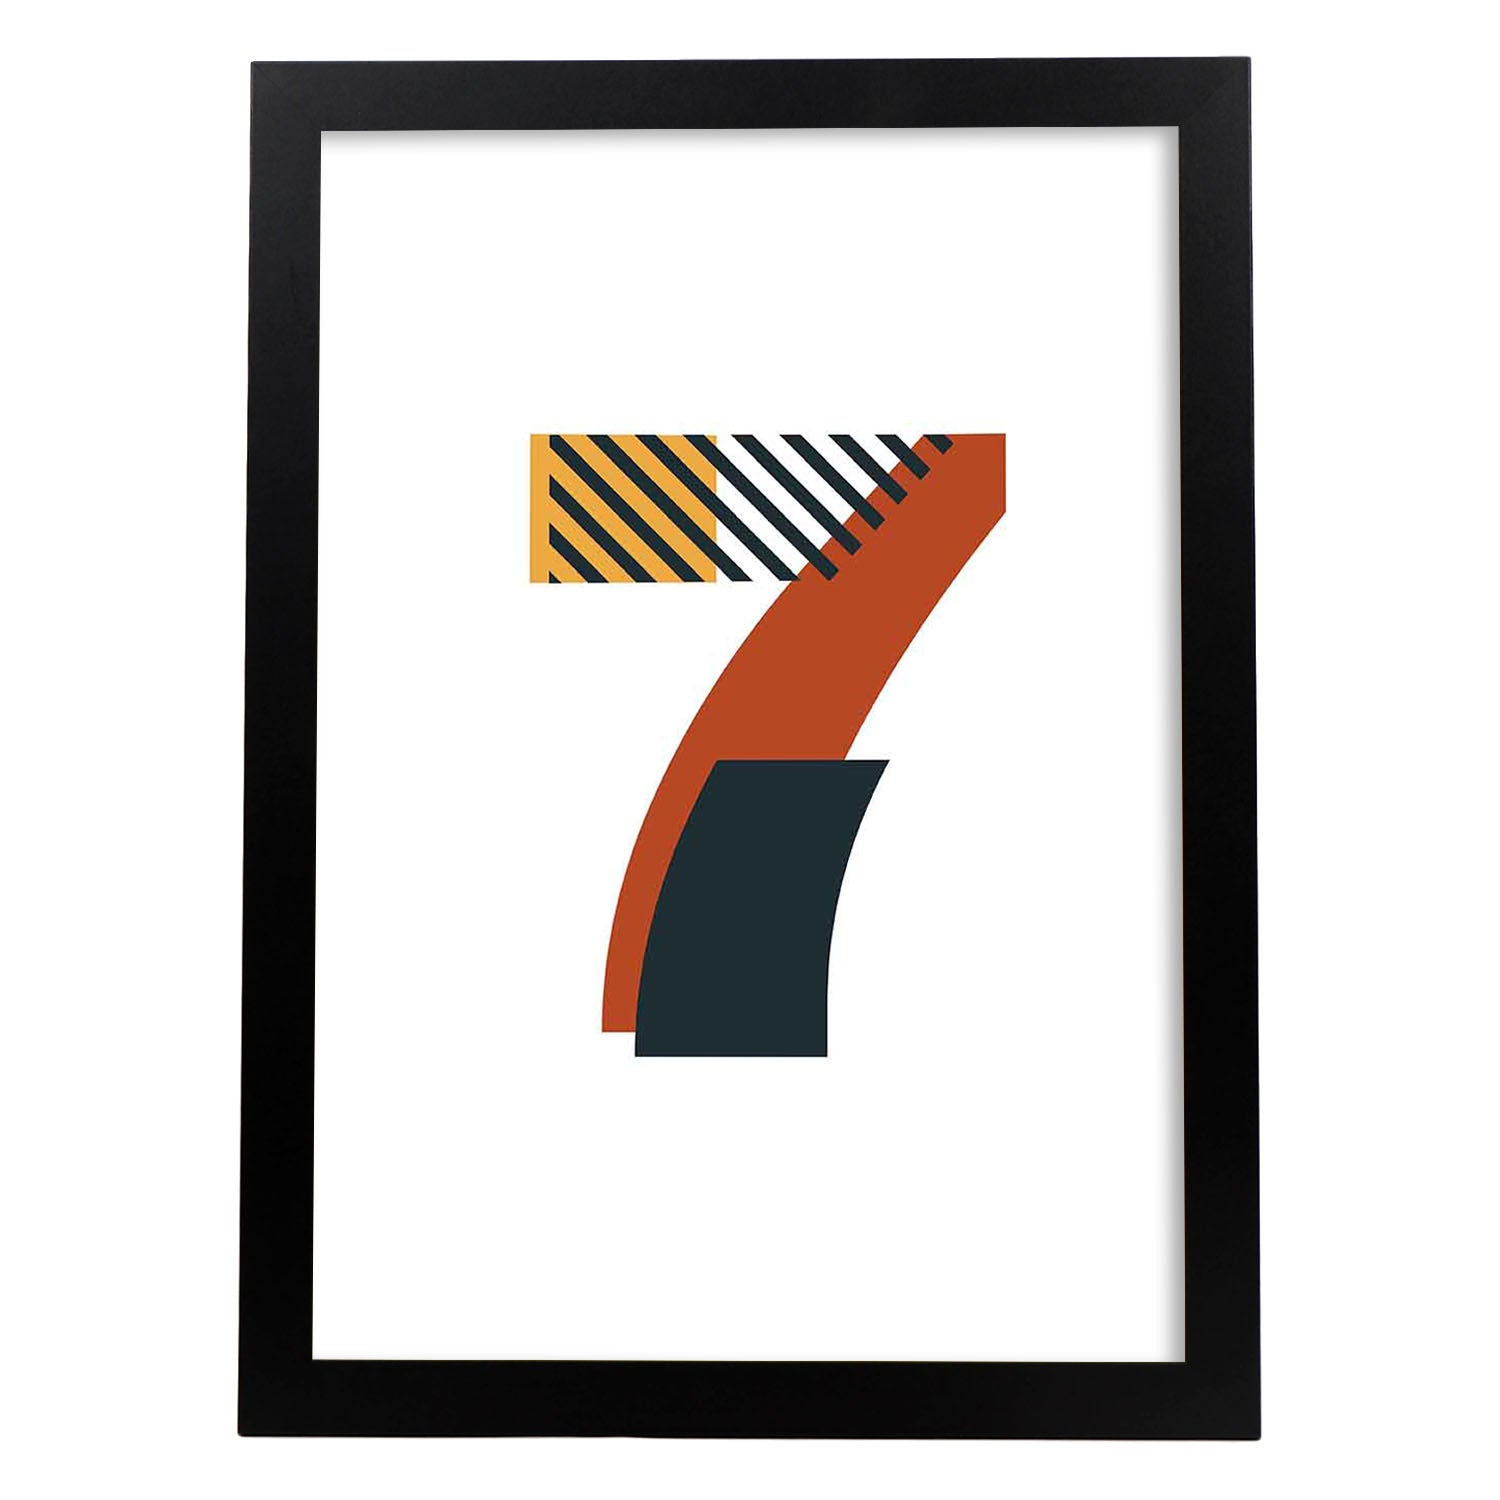 Poster de número 7. Lámina estilo Geometria con imágenes del alfabeto.-Artwork-Nacnic-A3-Marco Negro-Nacnic Estudio SL